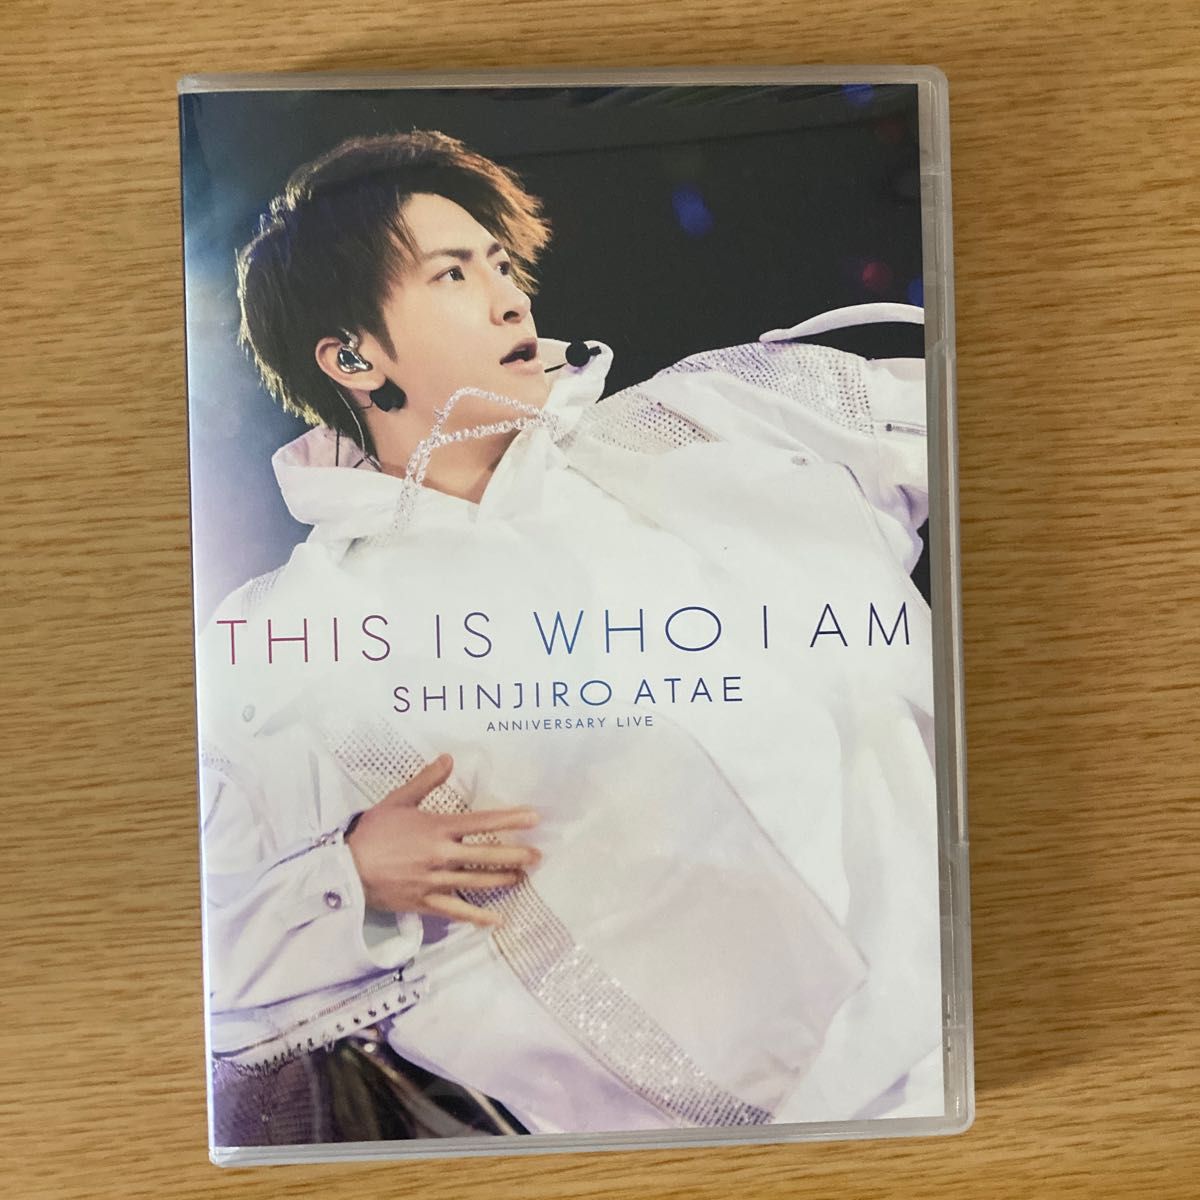 SHINJIRO ATAE 2DVD/Anniversary Live 『THIS IS WHO I AM』 